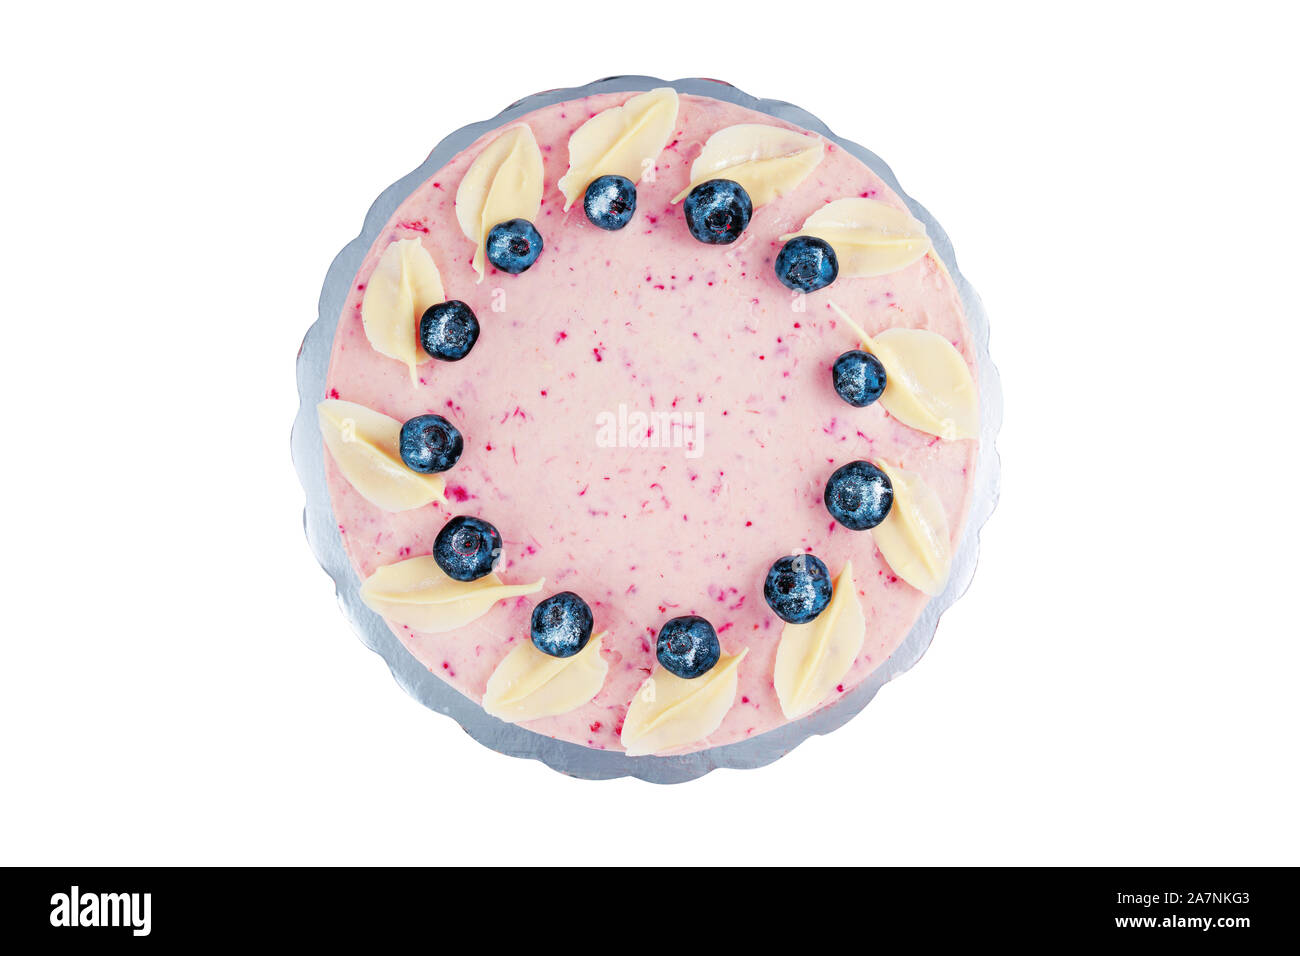 Cake chocolate with yogurt cream and blueberries fruits isolated on white background Stock Photo